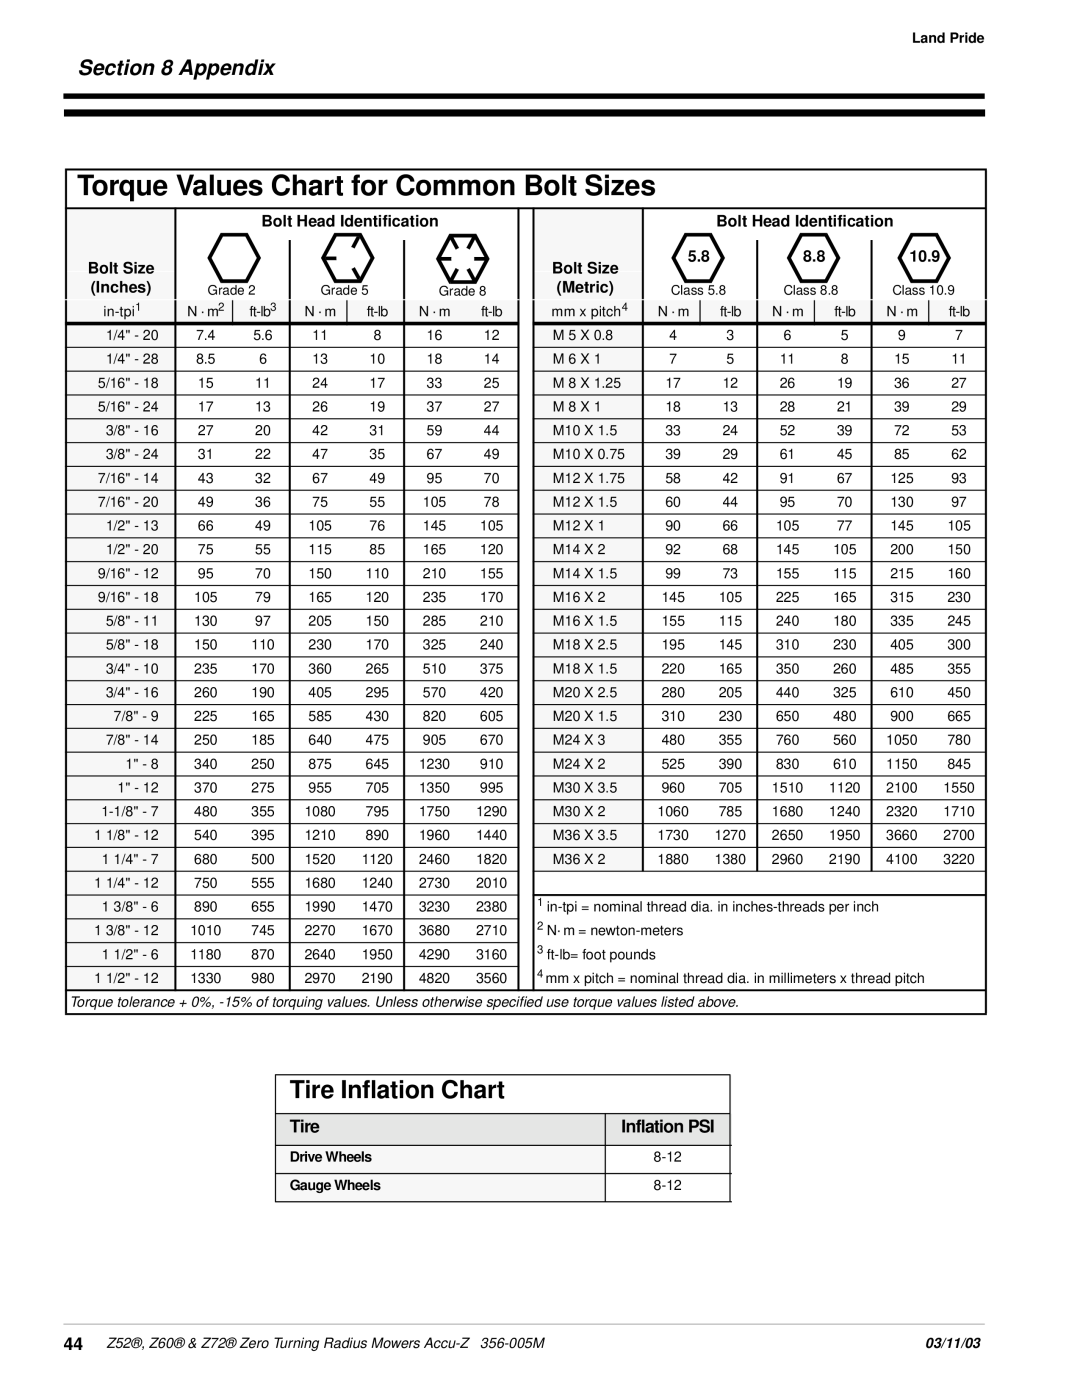 Land Pride Z52 Torque Values Chart for Common Bolt Sizes, Tire Inflation Chart, Appendix, Bolt Head Identification, 10.9 